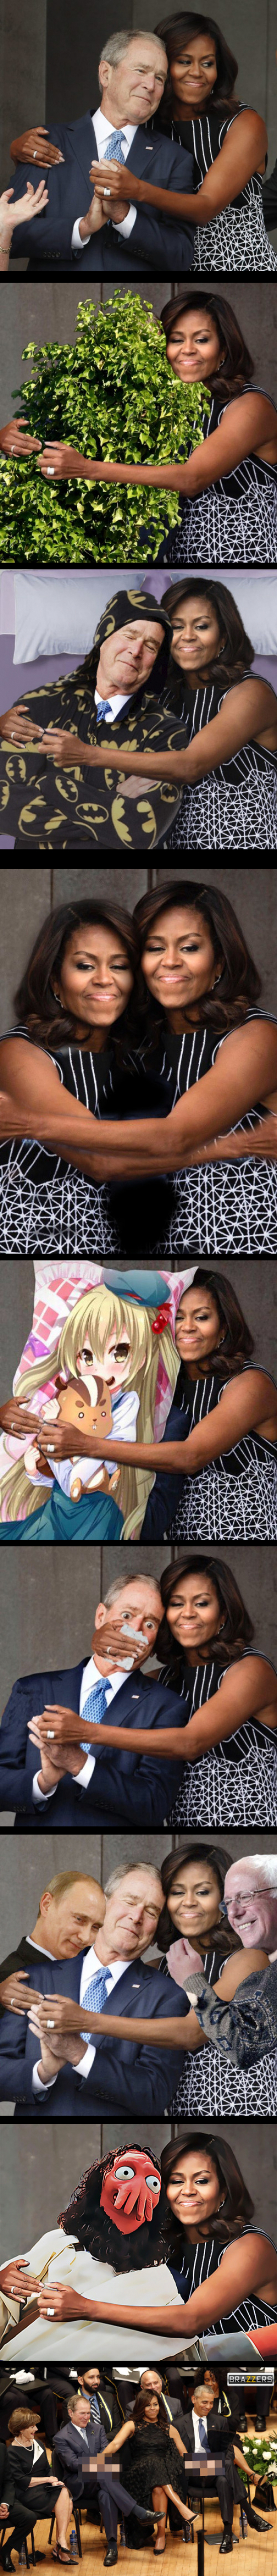 Meme_otros - Michelle Obama y el abrazo que llenó internet de memes